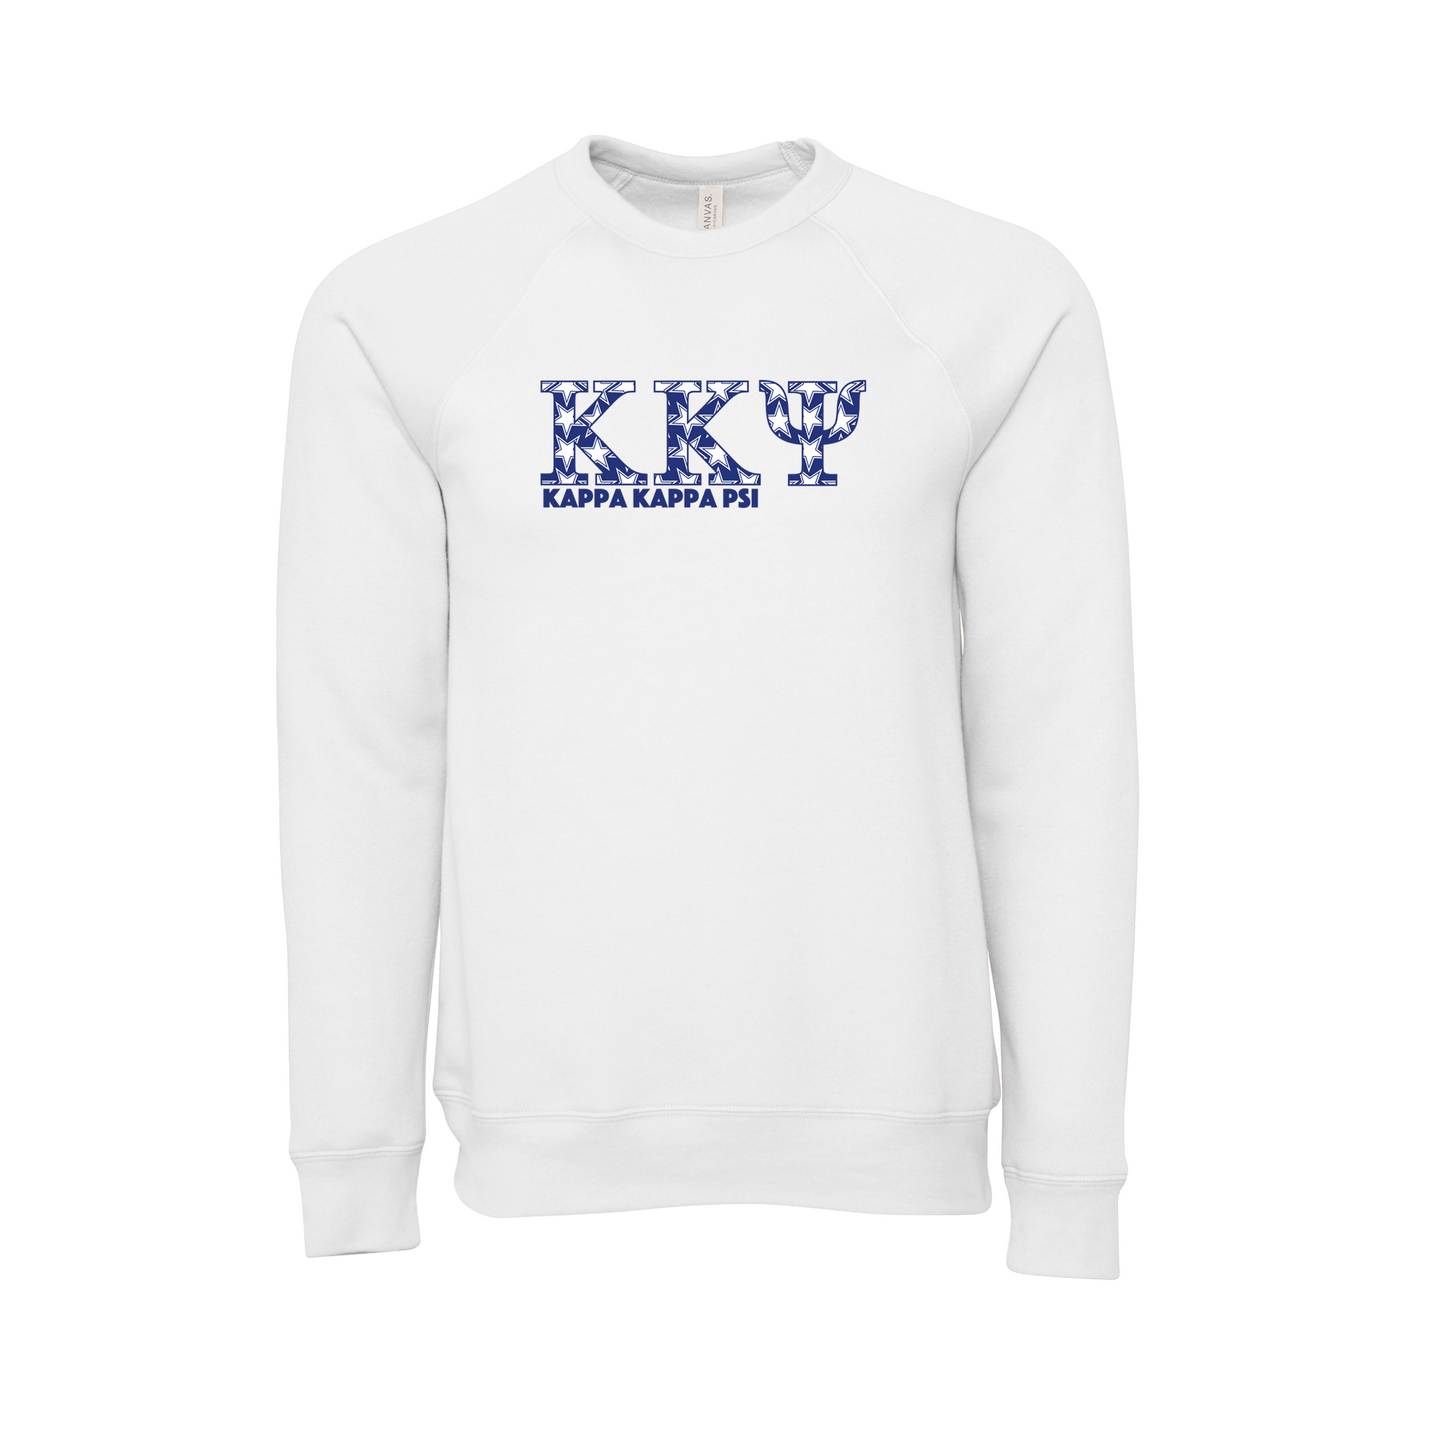 Kappa Kappa Psi Applique Letters Crewneck Sweatshirt